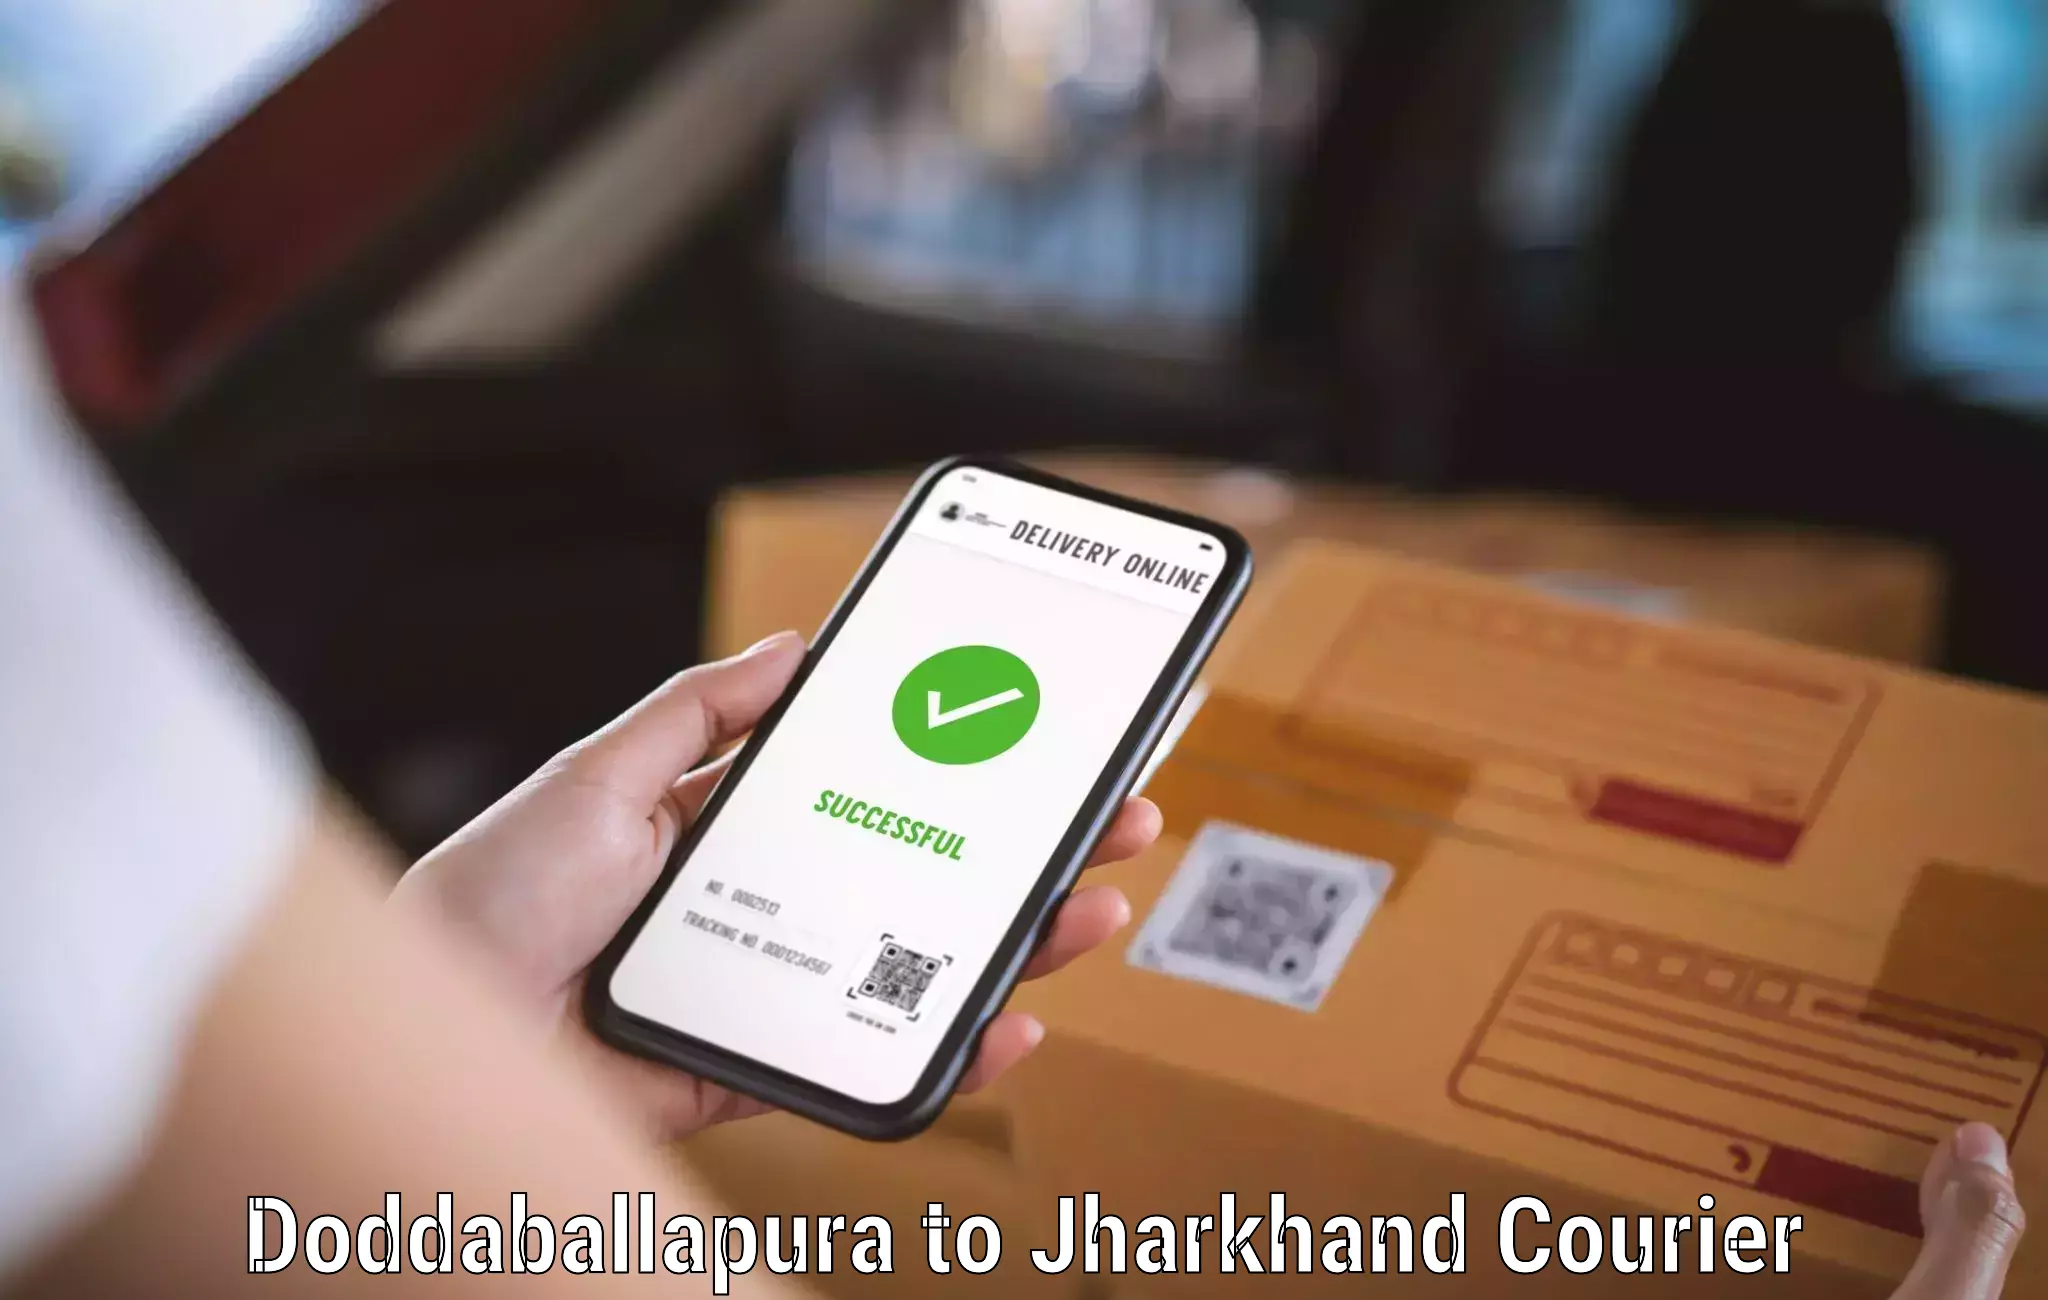 Courier app in Doddaballapura to IIT Dhanbad